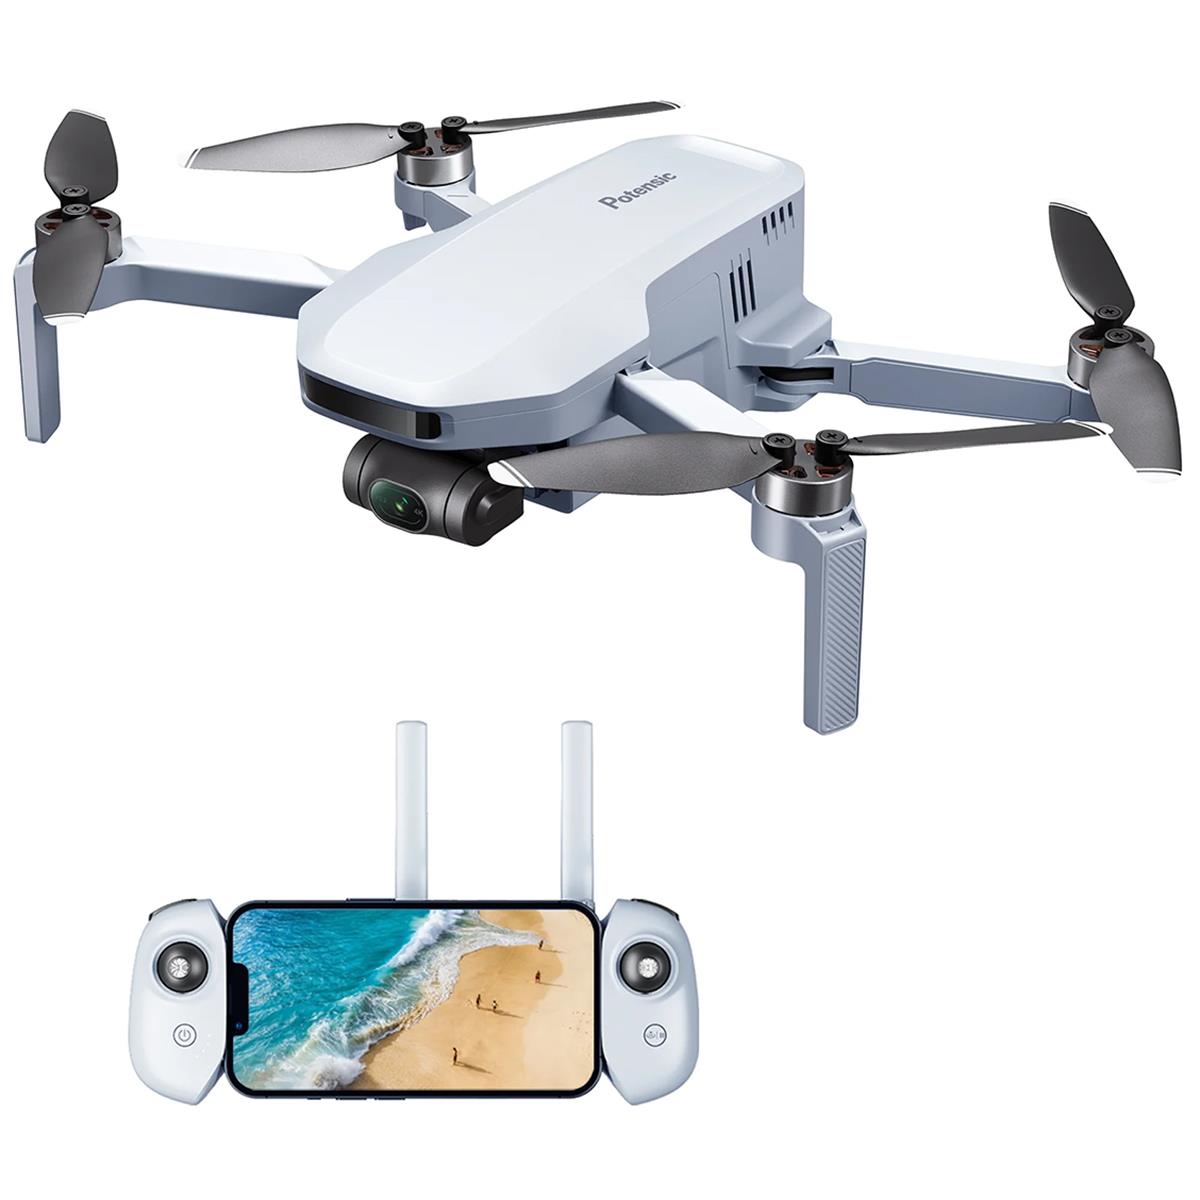 Image of Potensic ATOM GPS Drone with 4K 3-Axis Gimbal Camera